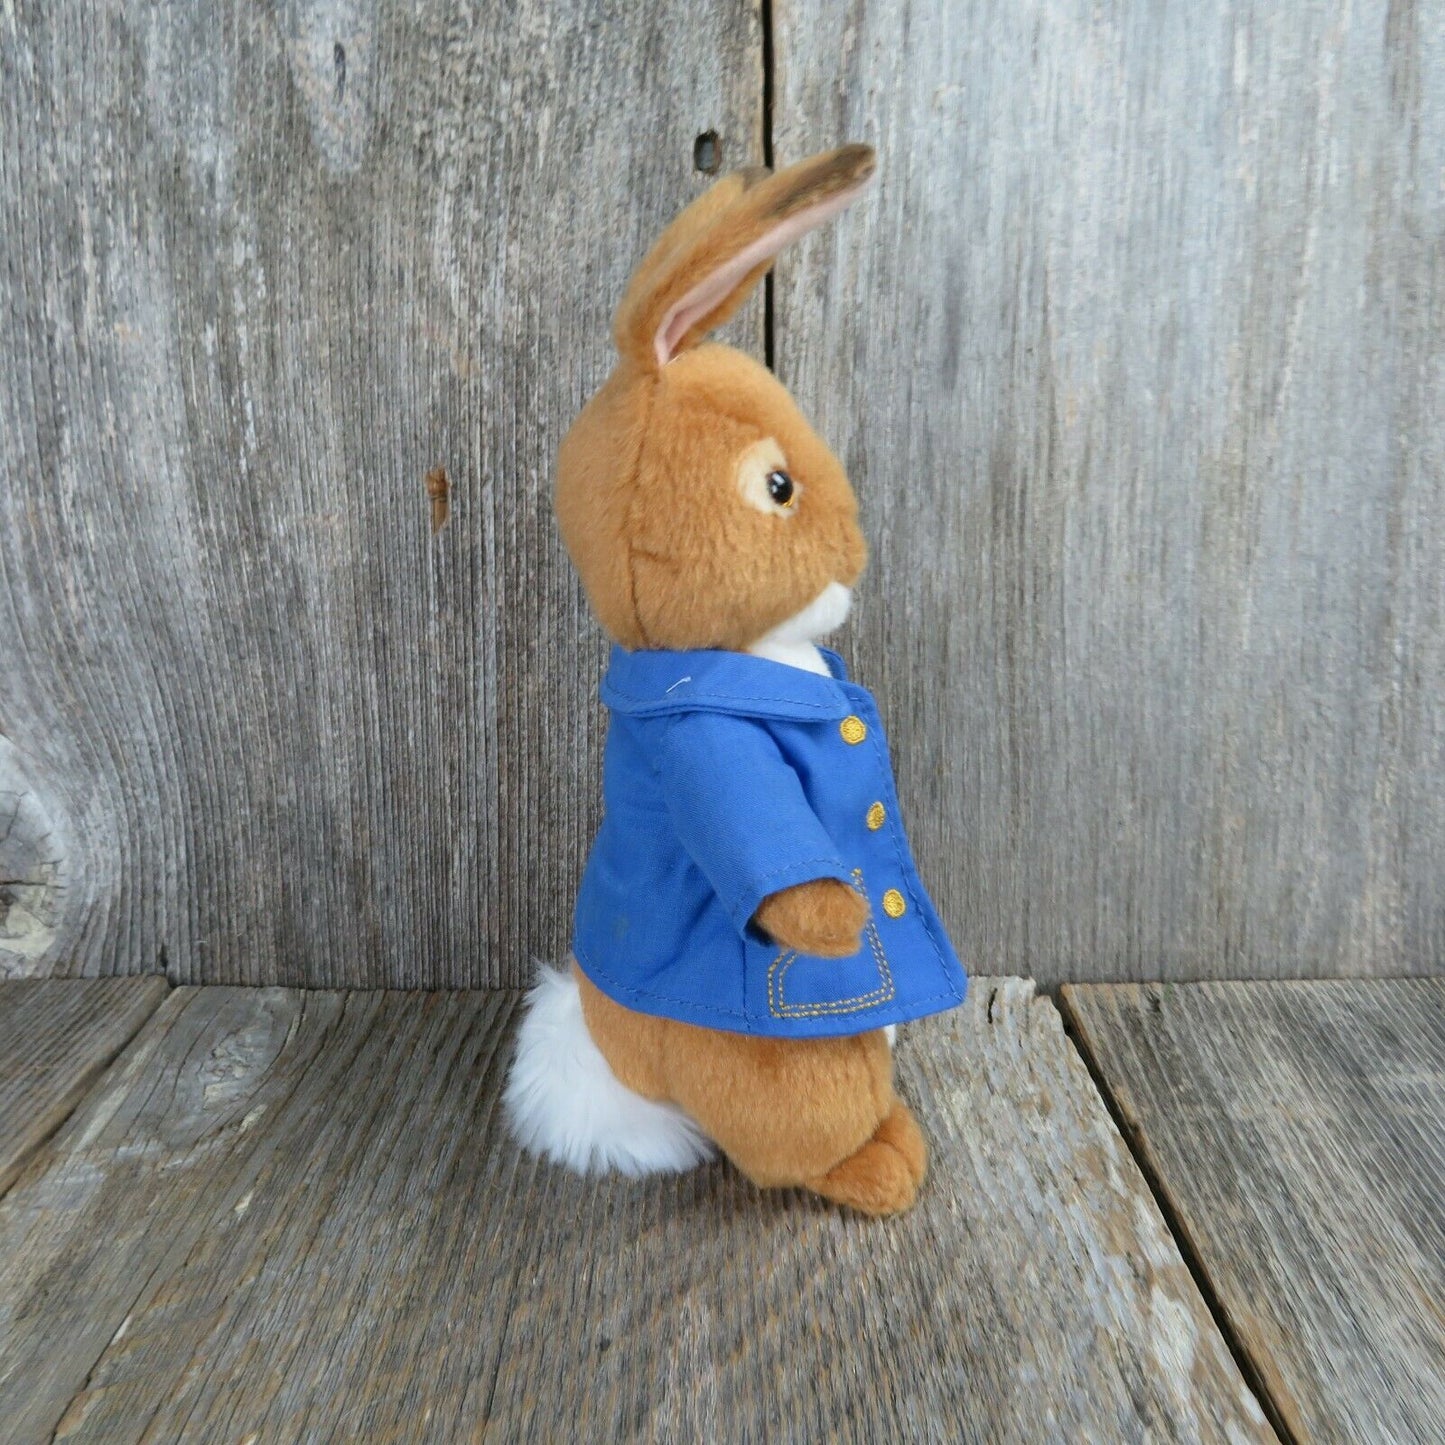 Peter Rabbit Plush Bunny TY 2018 Beanie Babies Stuffed Animal